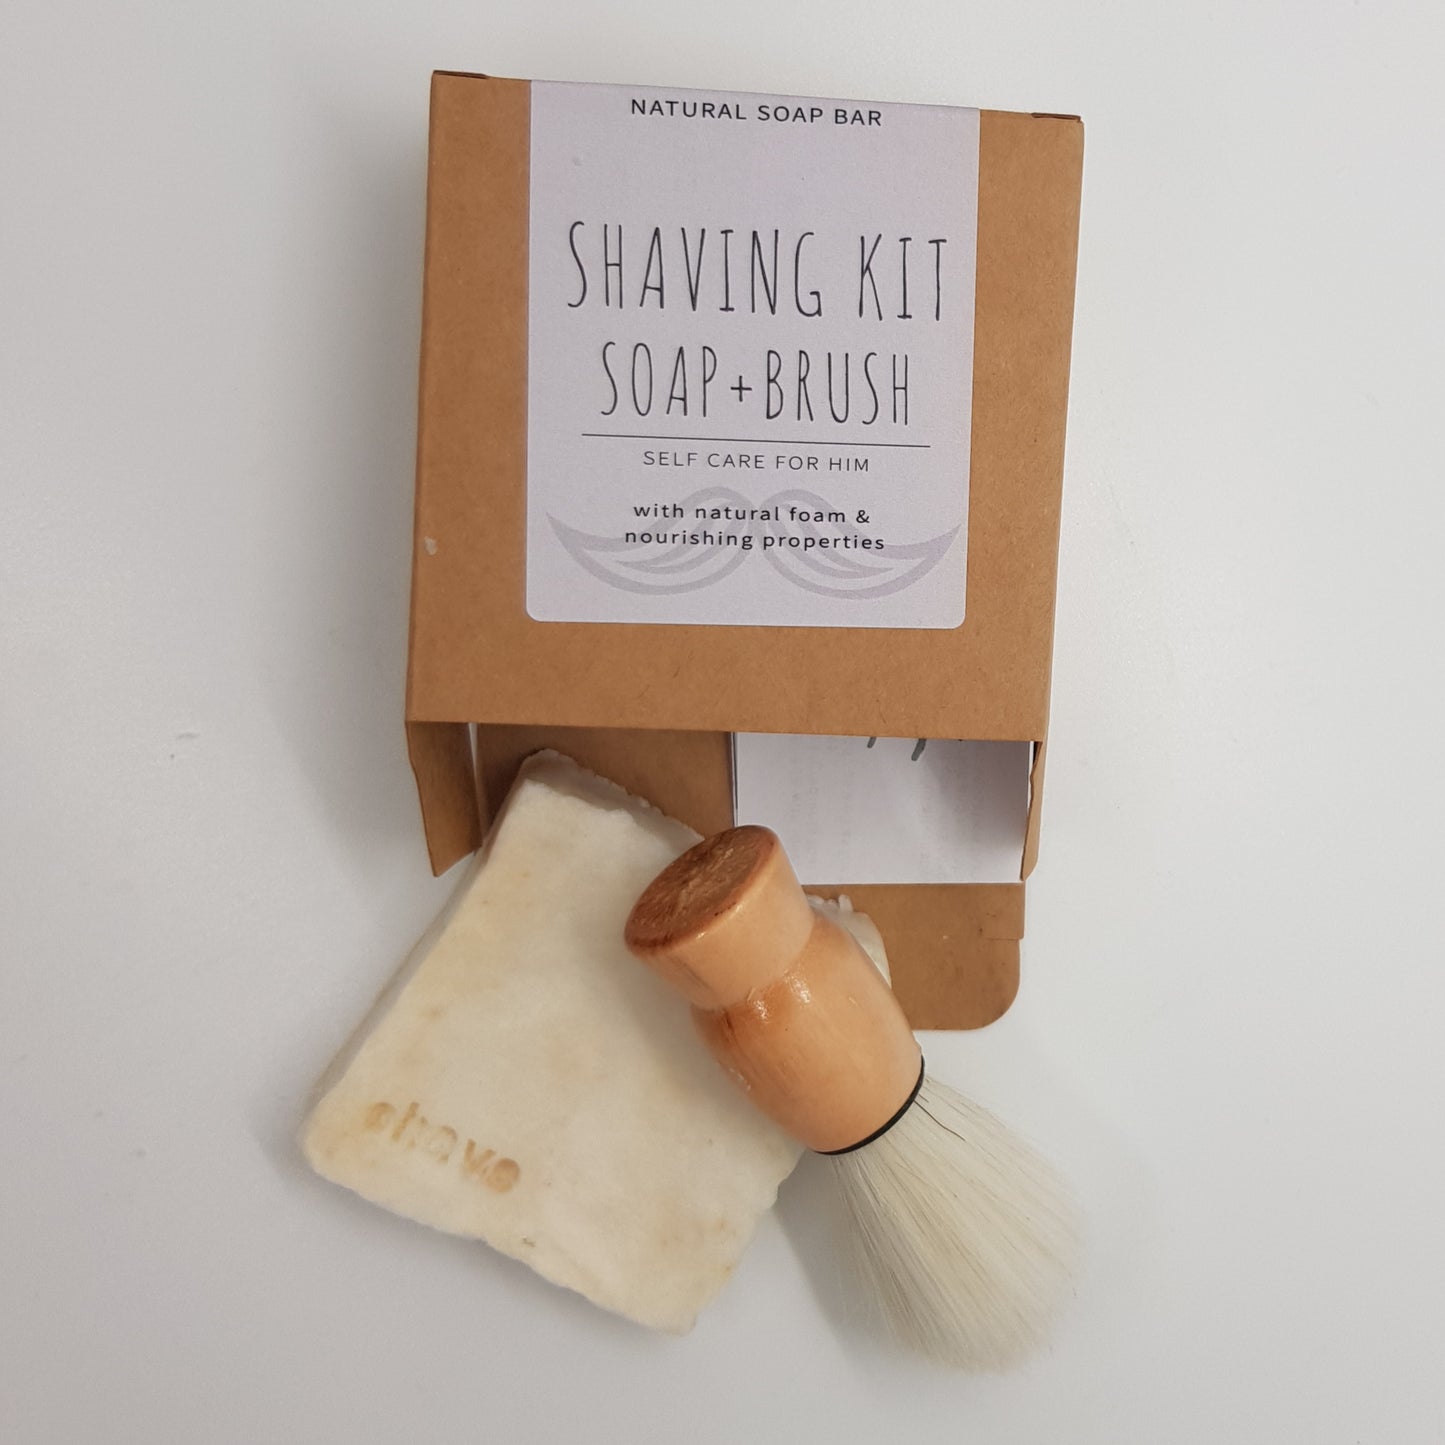 SELF CARE FOR HIM - Shaving kit, brush and foaming soap